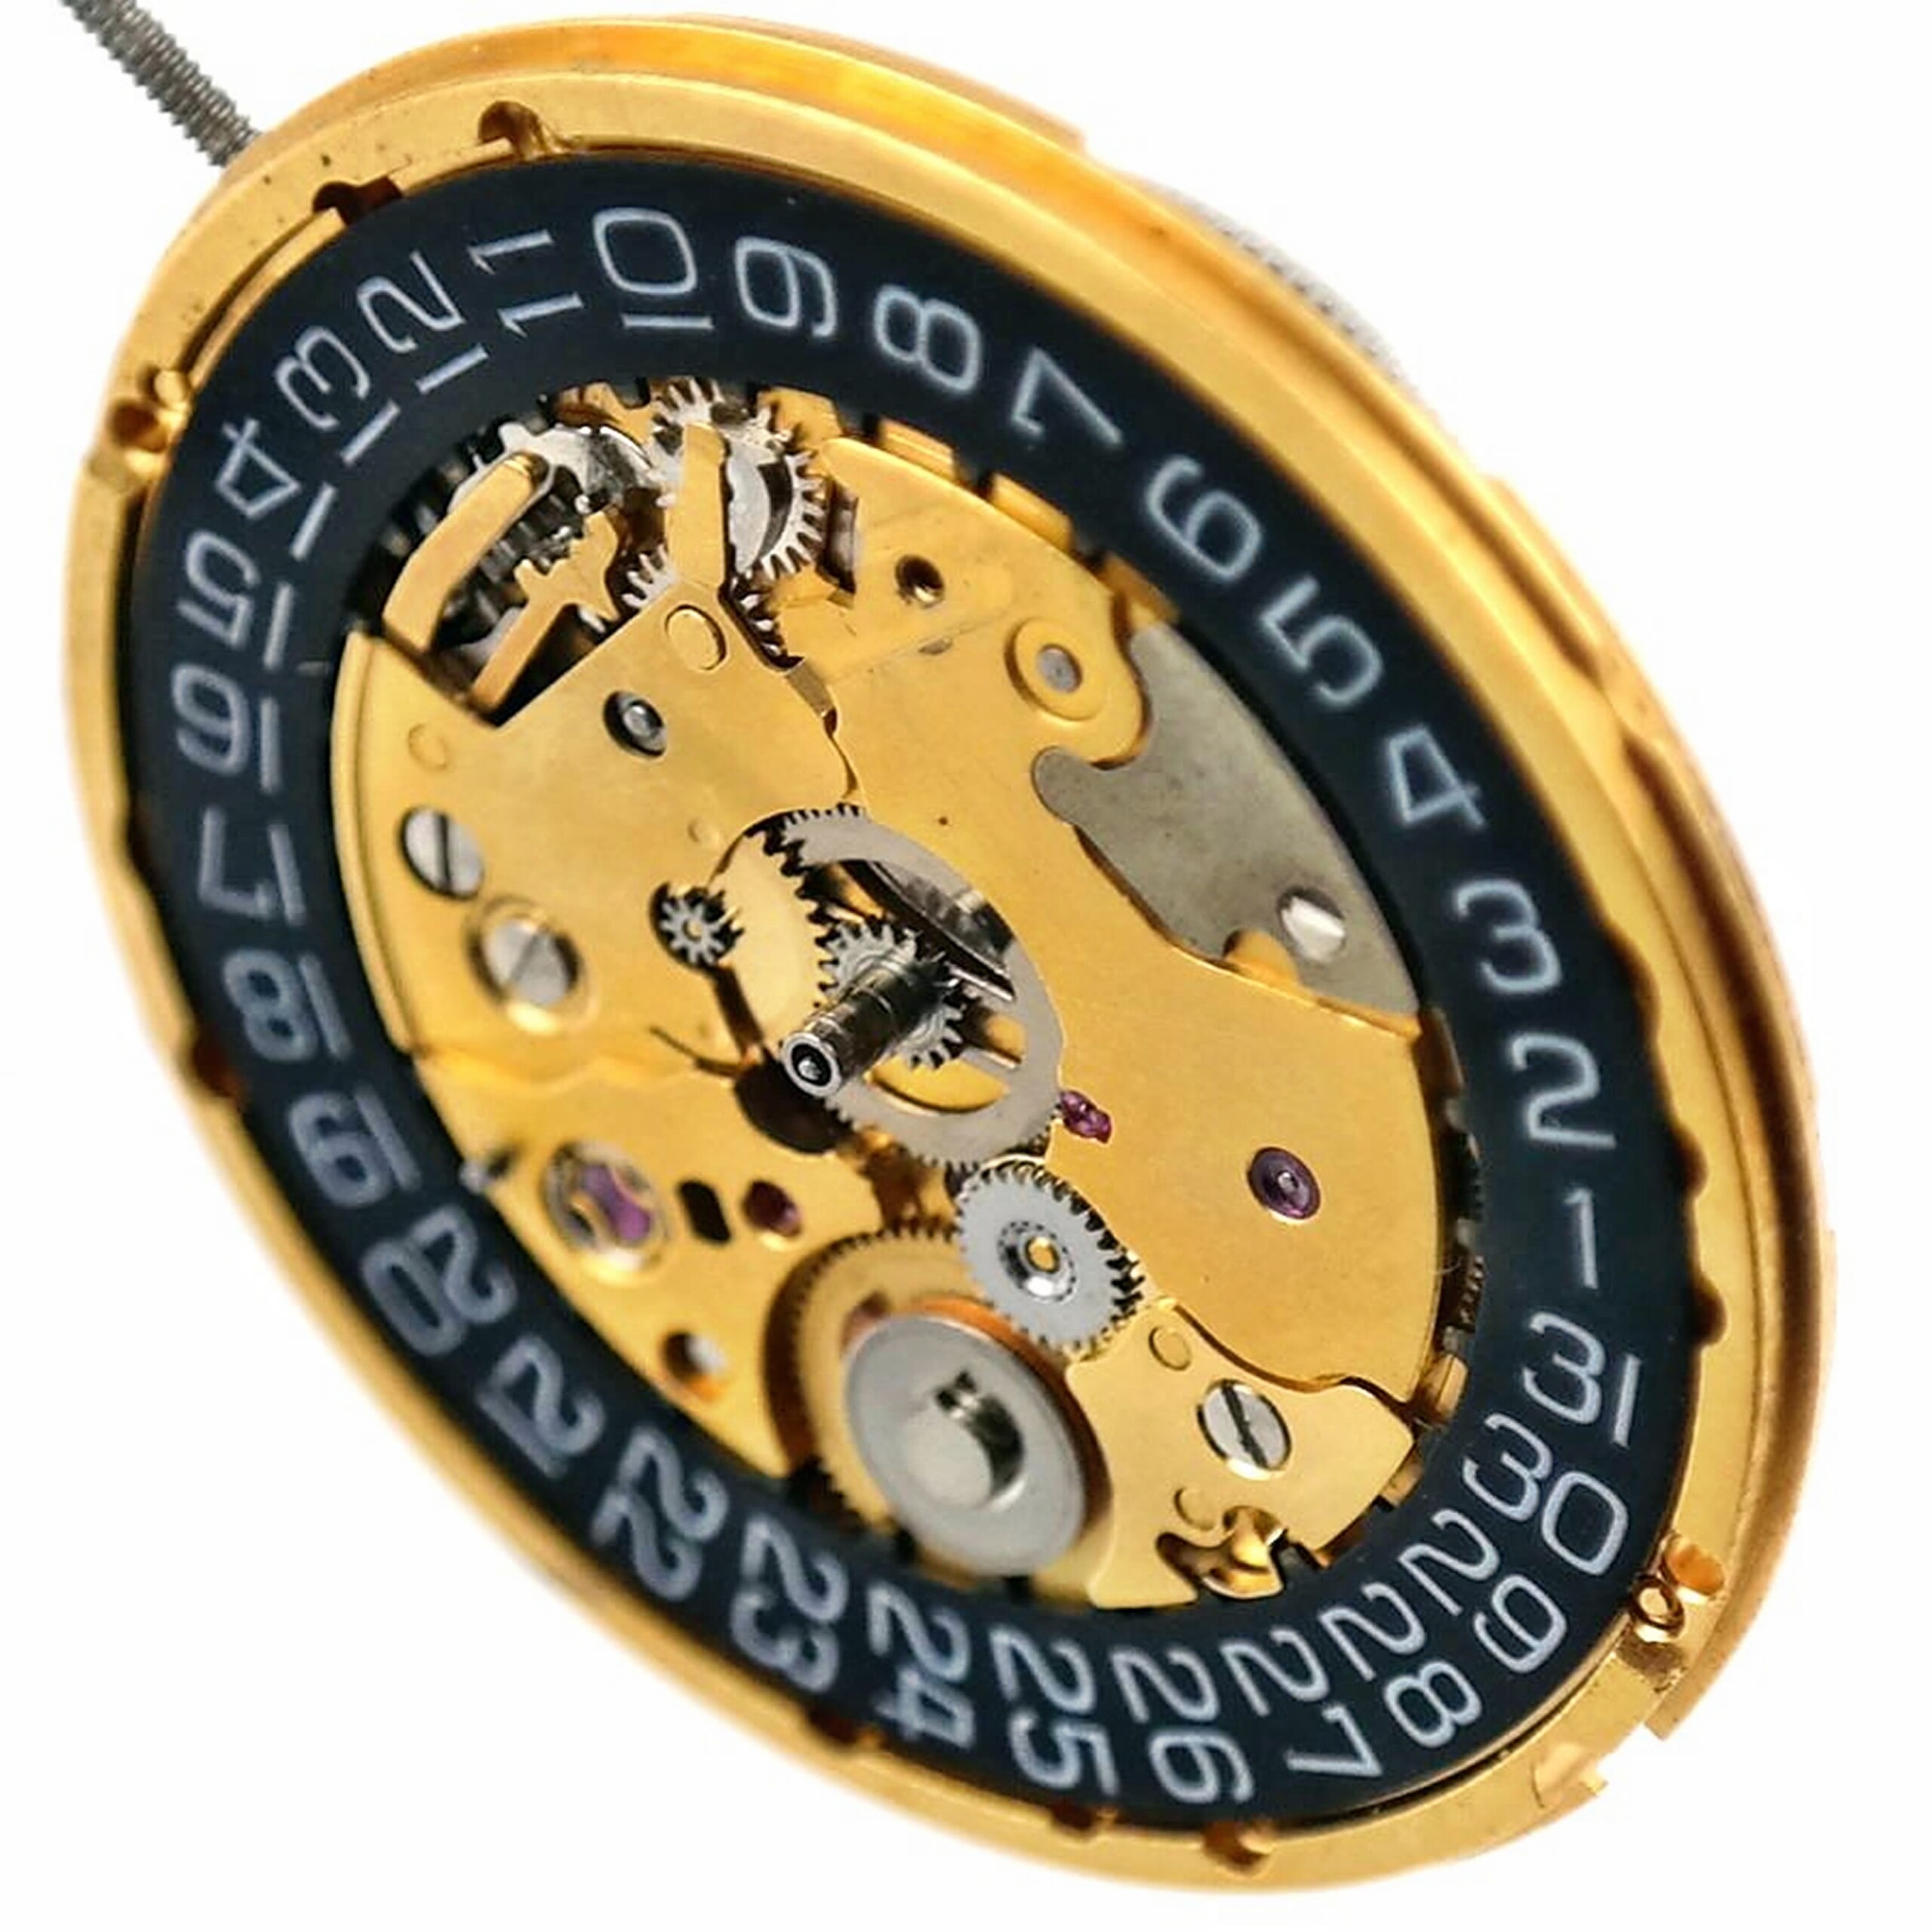 IWC Calibre C37541 Automatic Watch Movement Porsche Design Compass